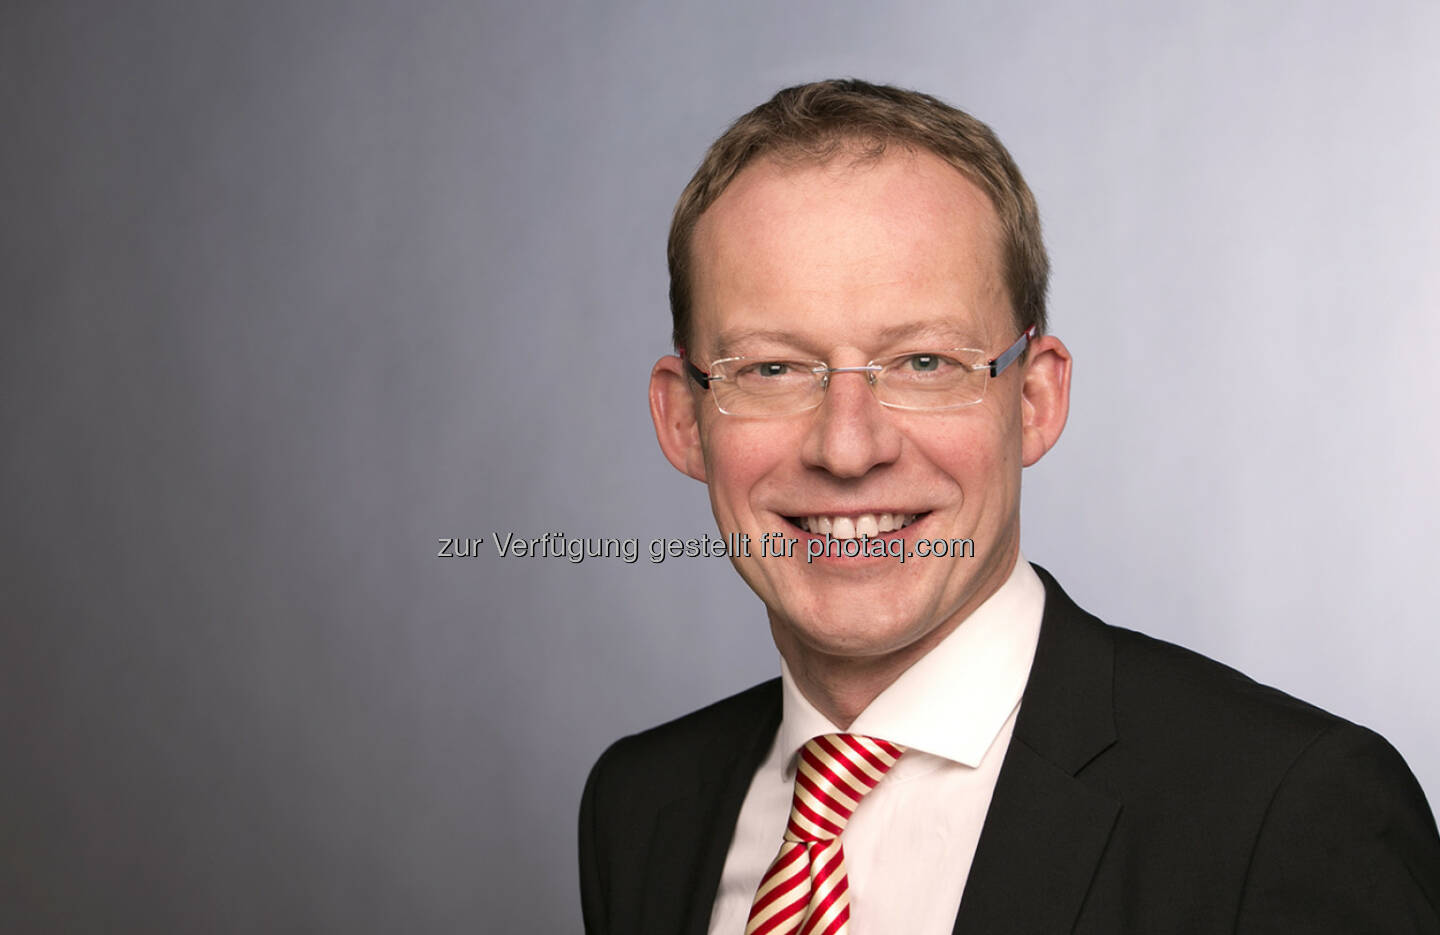 Bernd Sauer neuer Vorstand der Goetzfried AG in Wiesbaden - Allgeier Experts SE: Bernd Sauer übernimmt den Vorstand der Goetzfried AG (Fotocredit: Allgeier Experts)